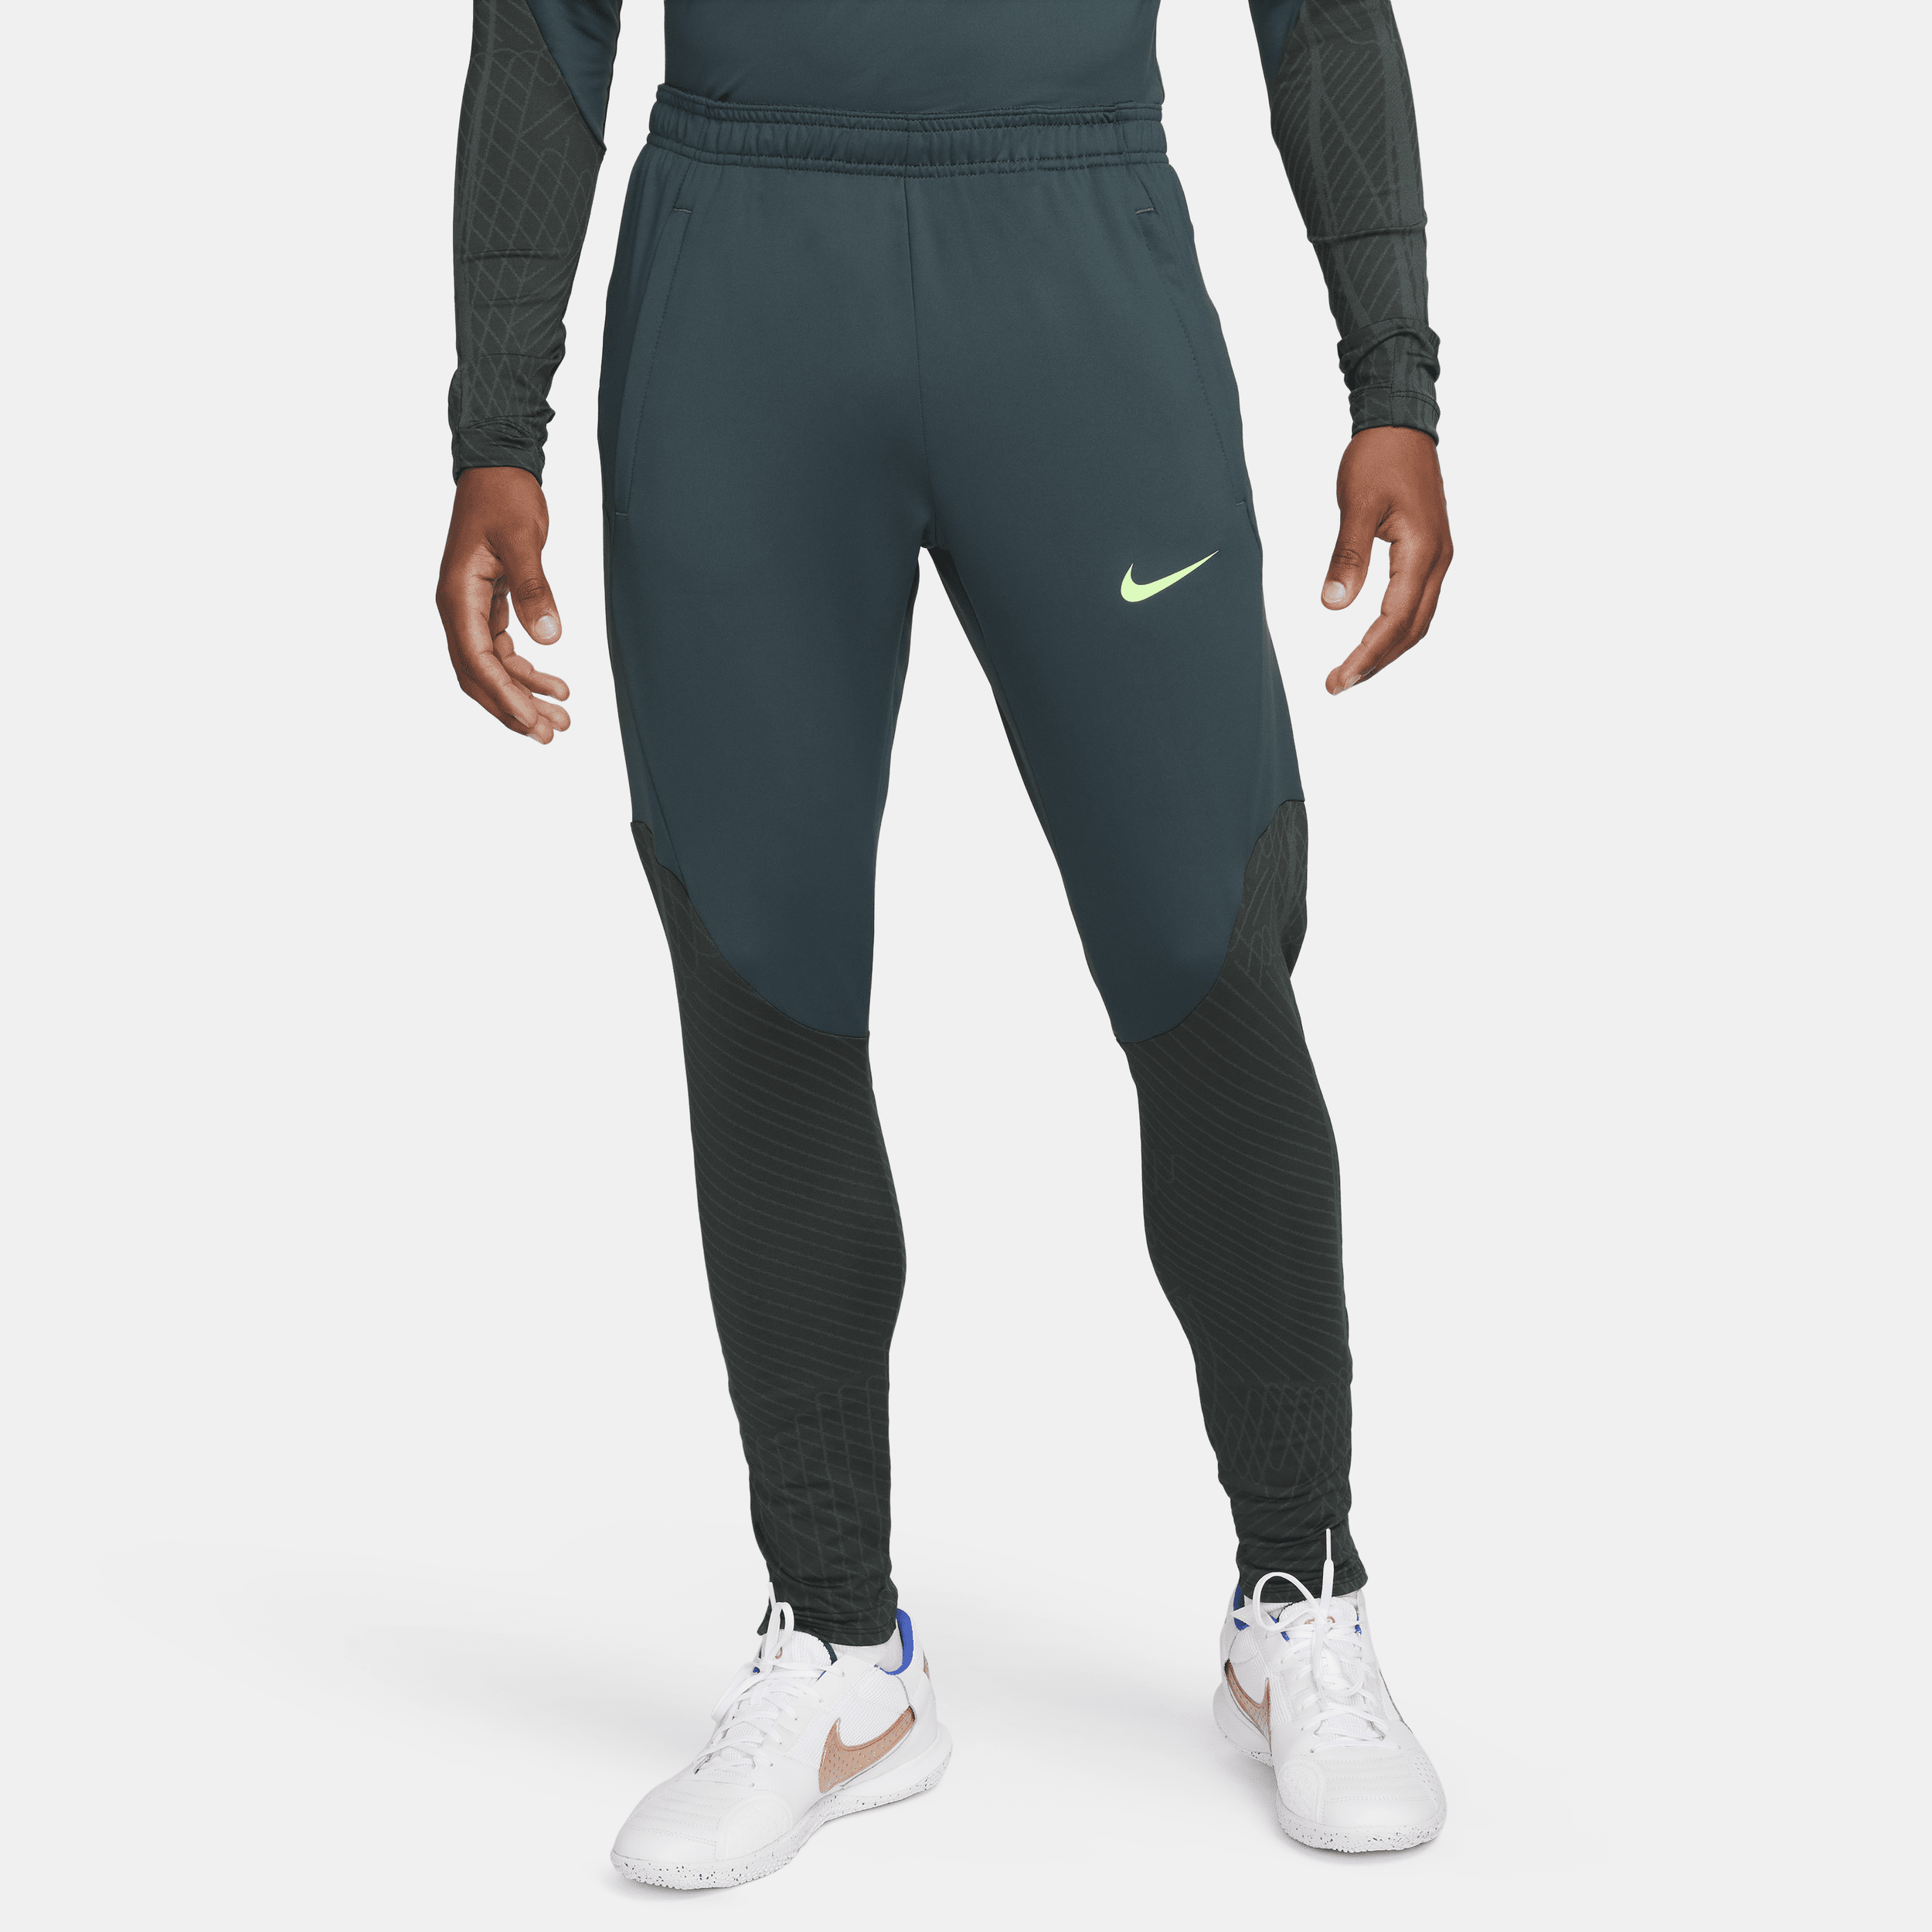 Nike Dri-FIT Strike-fodboldbukser til mænd - grøn